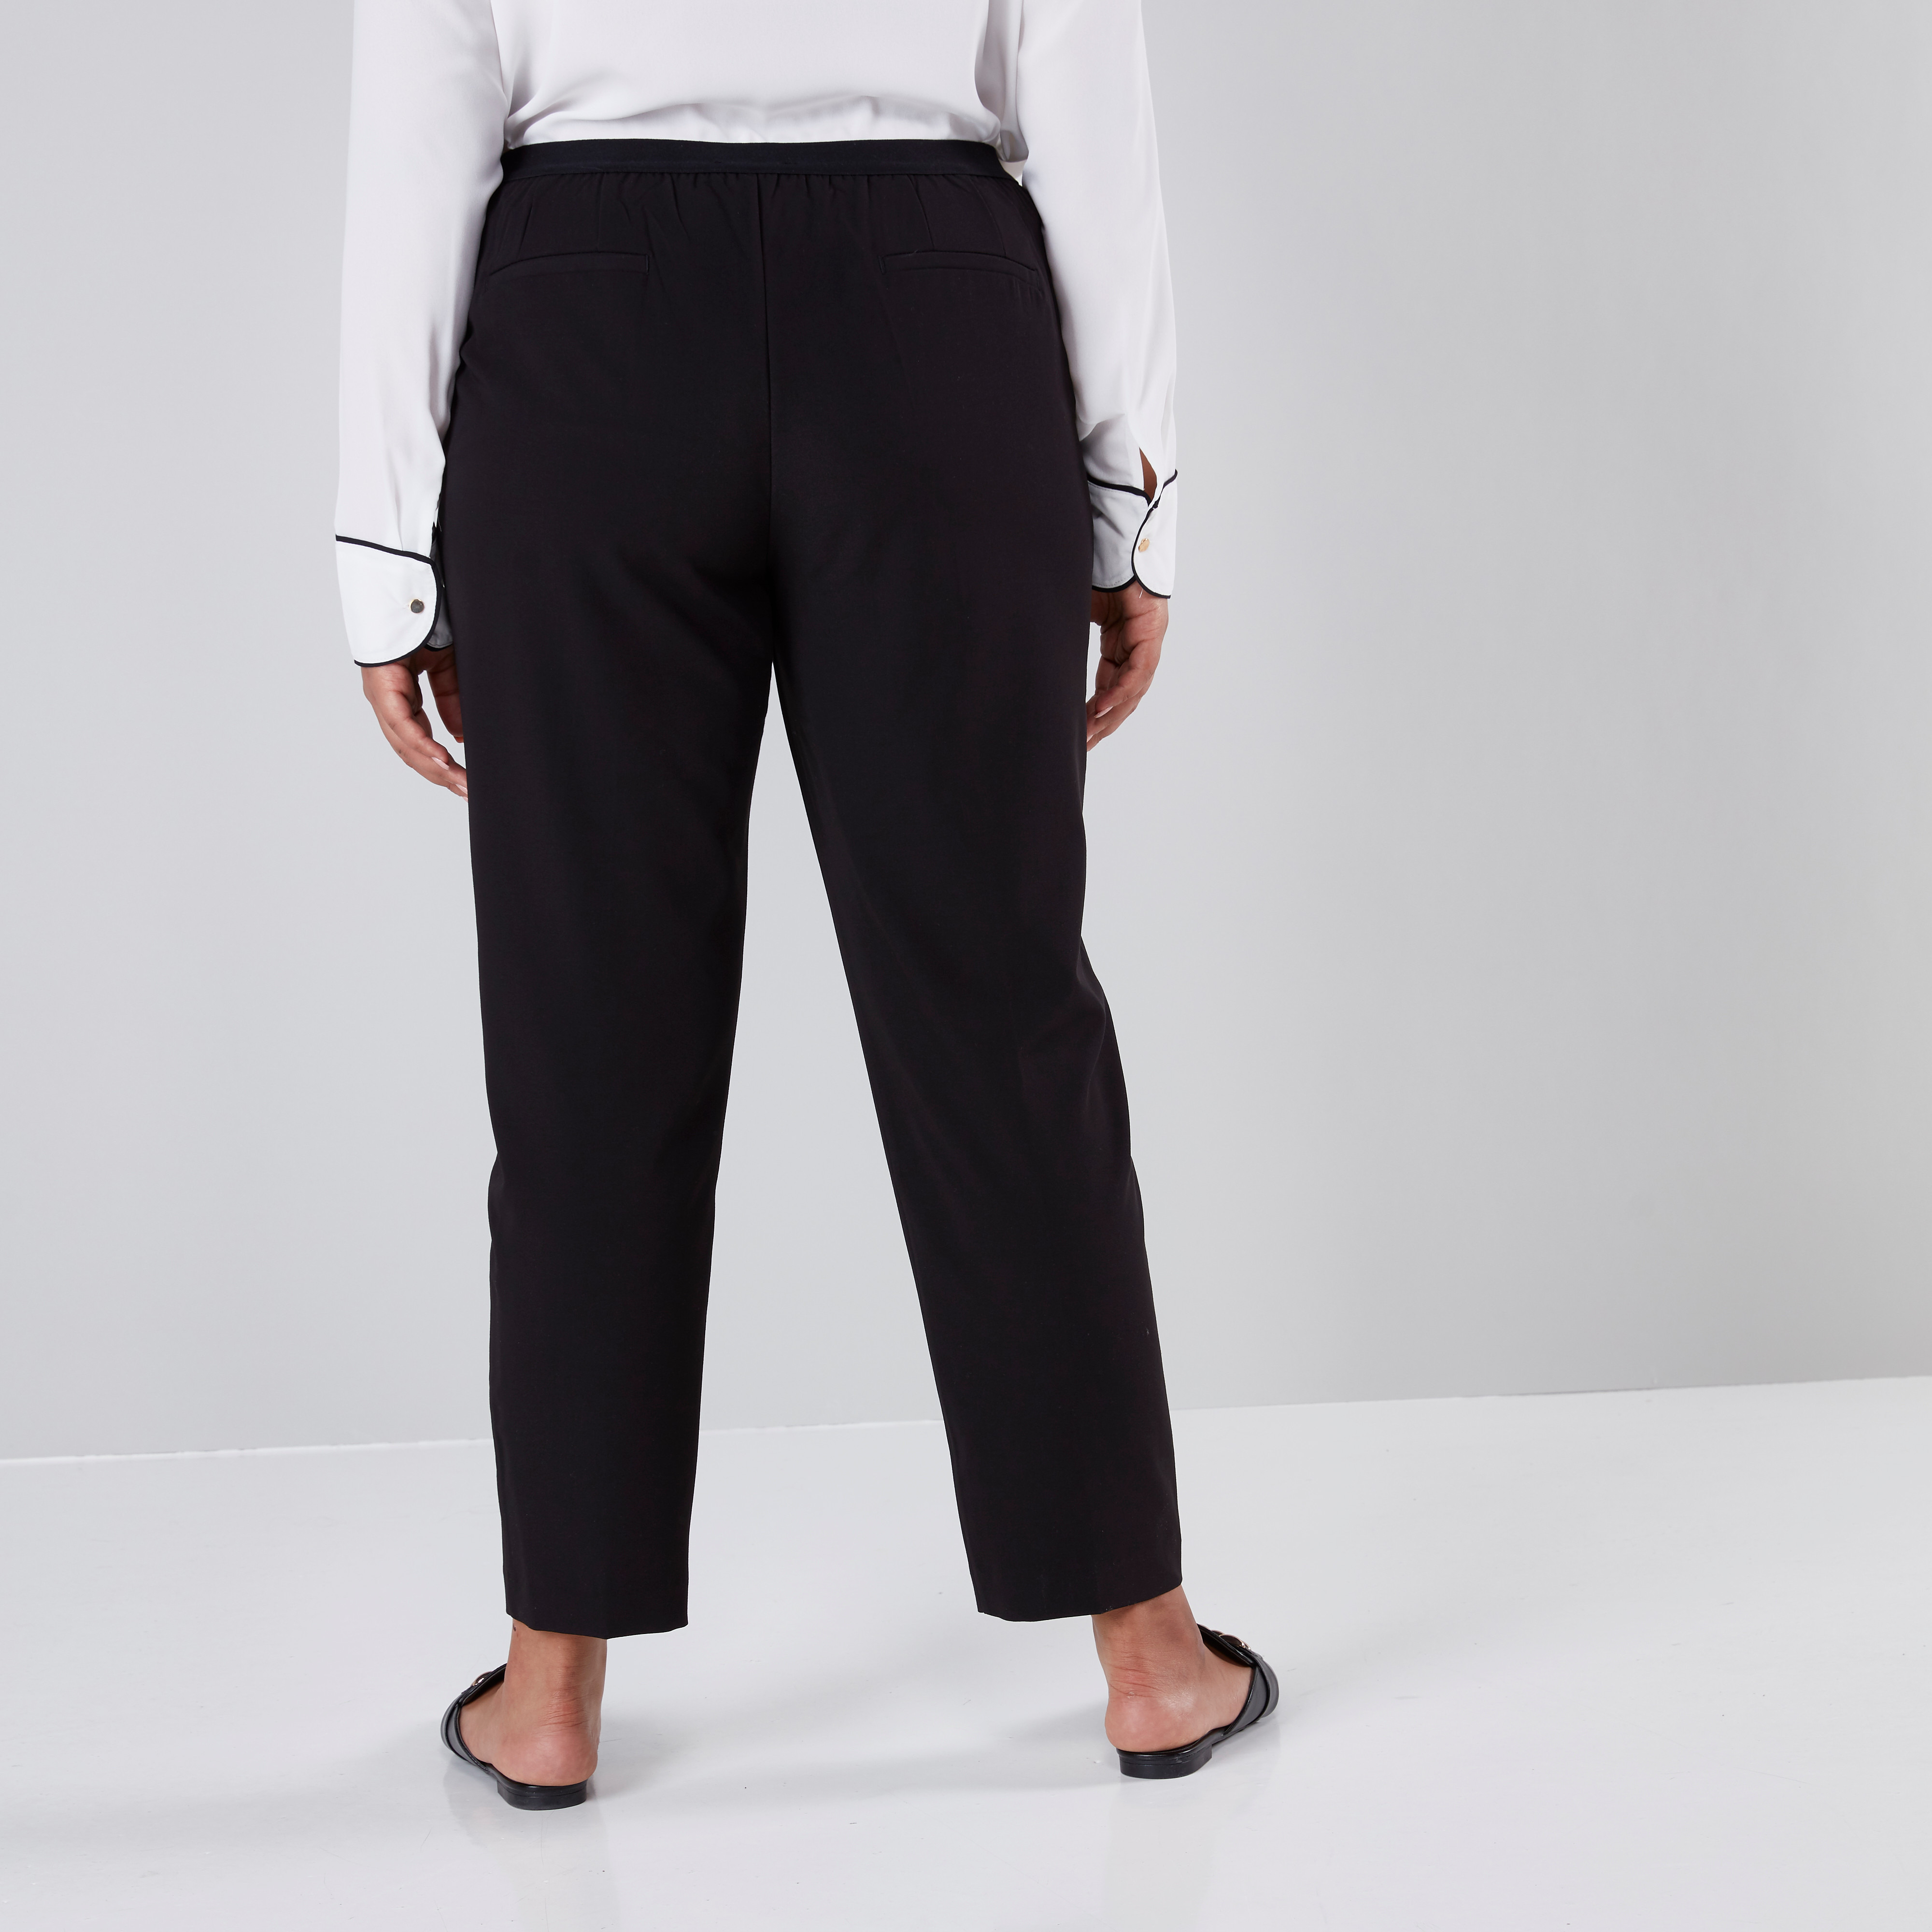 Buy Max Men's Slim Pants (NOOSNADJCLCHARCOAL_Charcoal_30) at Amazon.in